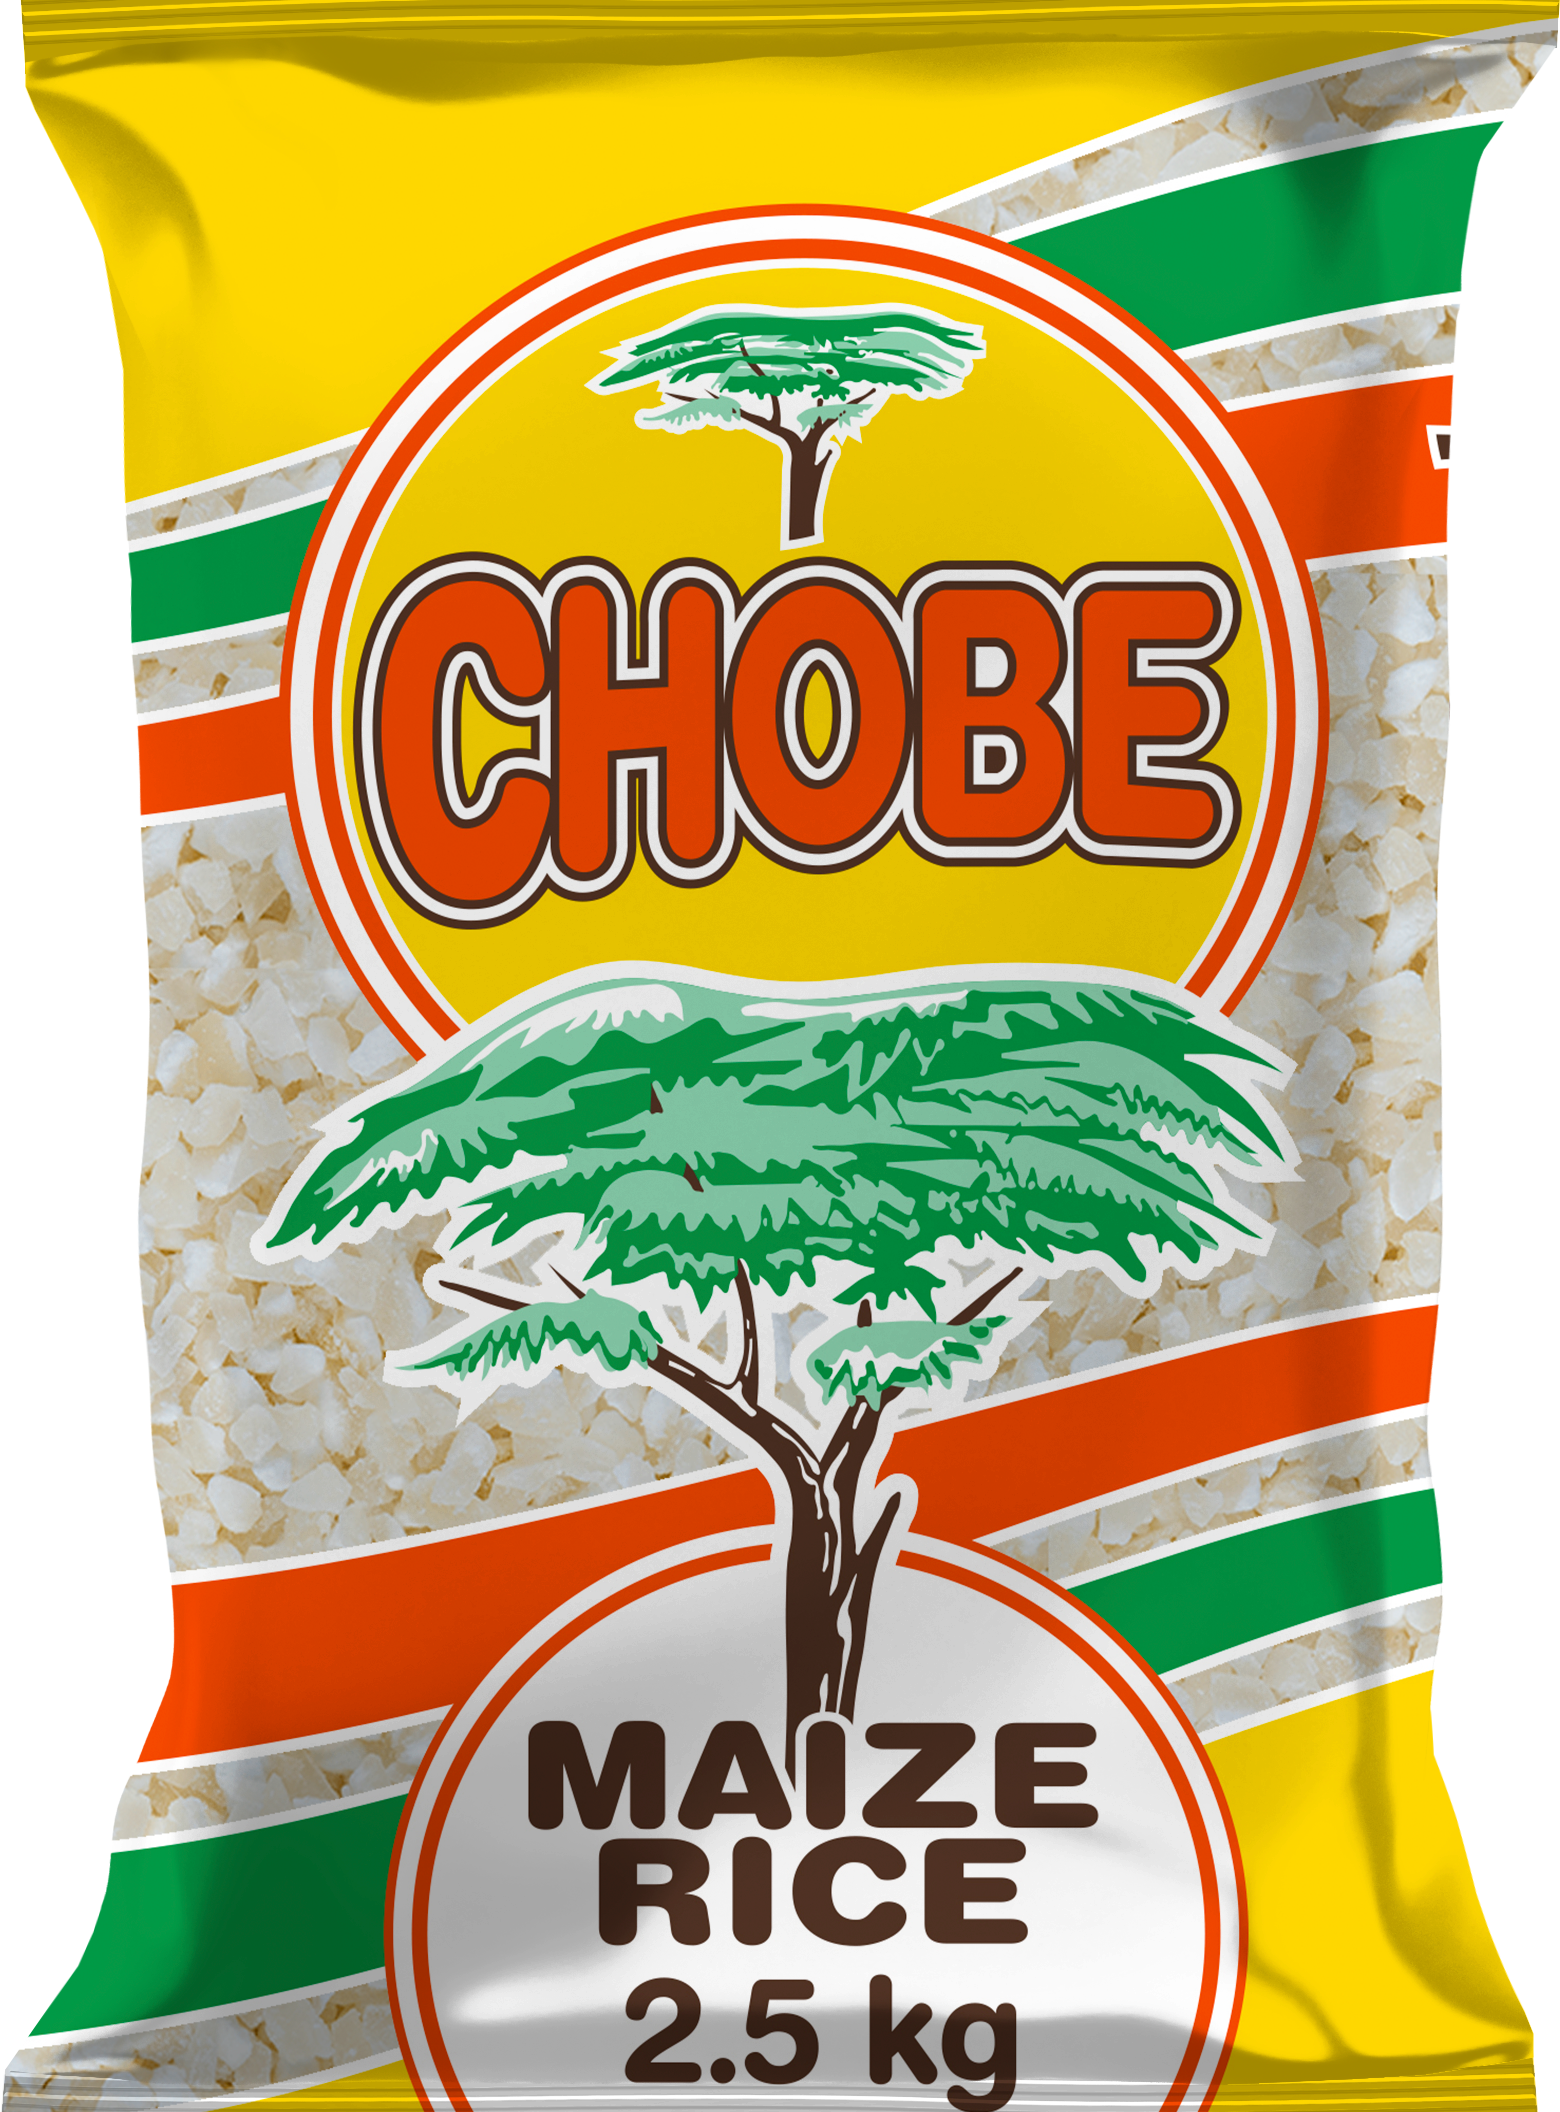 Chobe Maize Rice 2.5 Kg